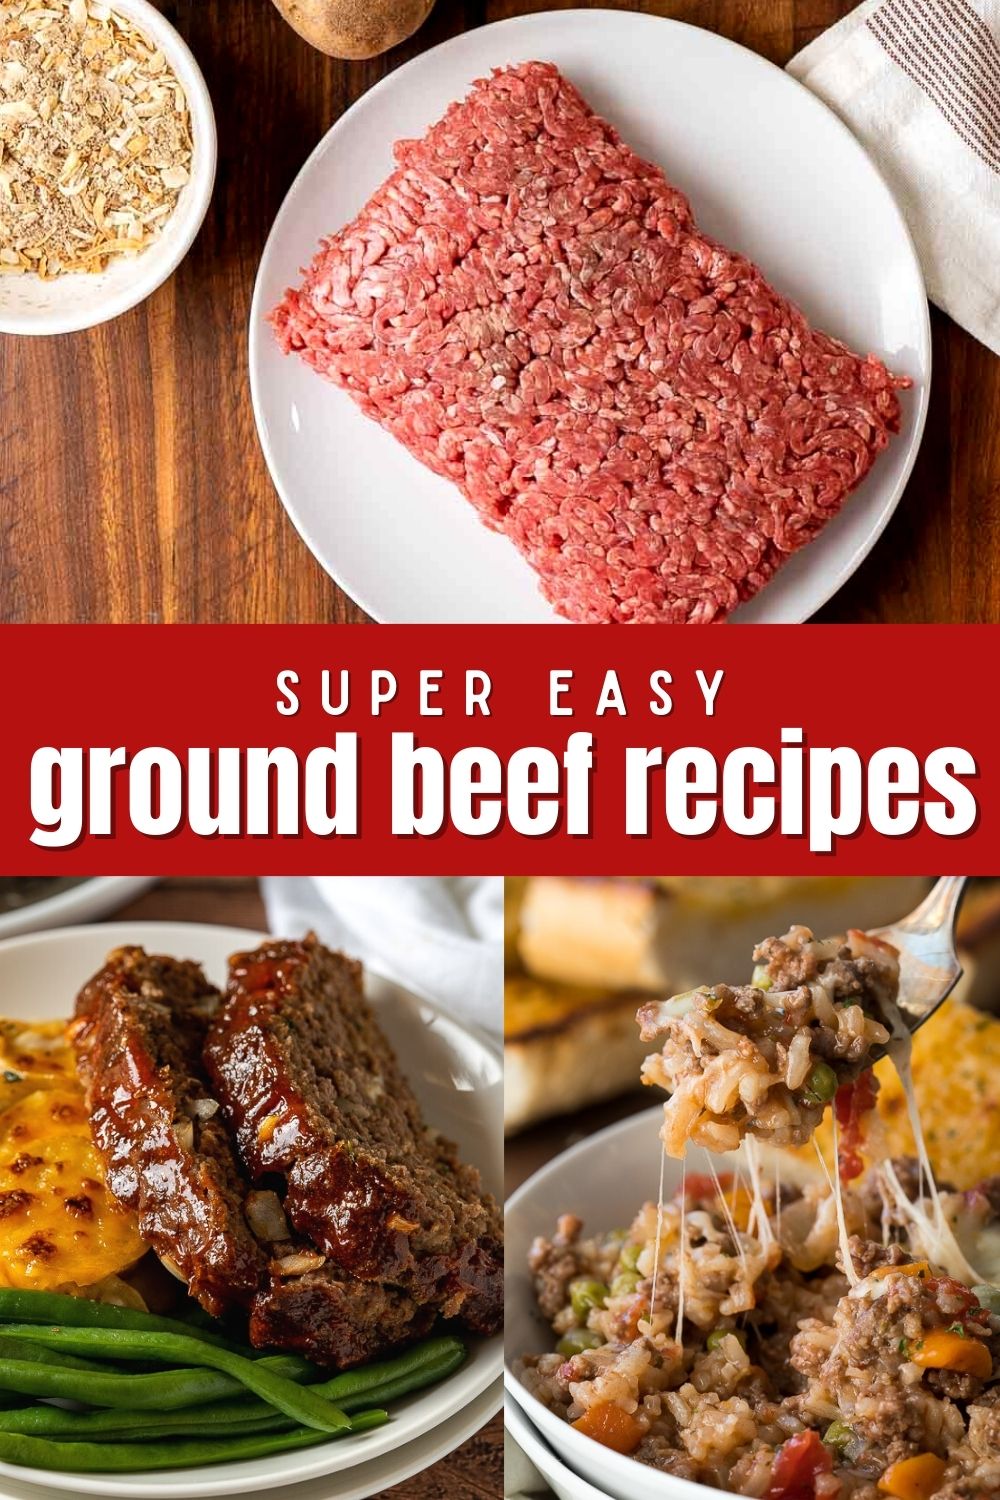 https://iwashyoudry.com/wp-content/uploads/2022/04/Ground-Beef-Recipes.jpg